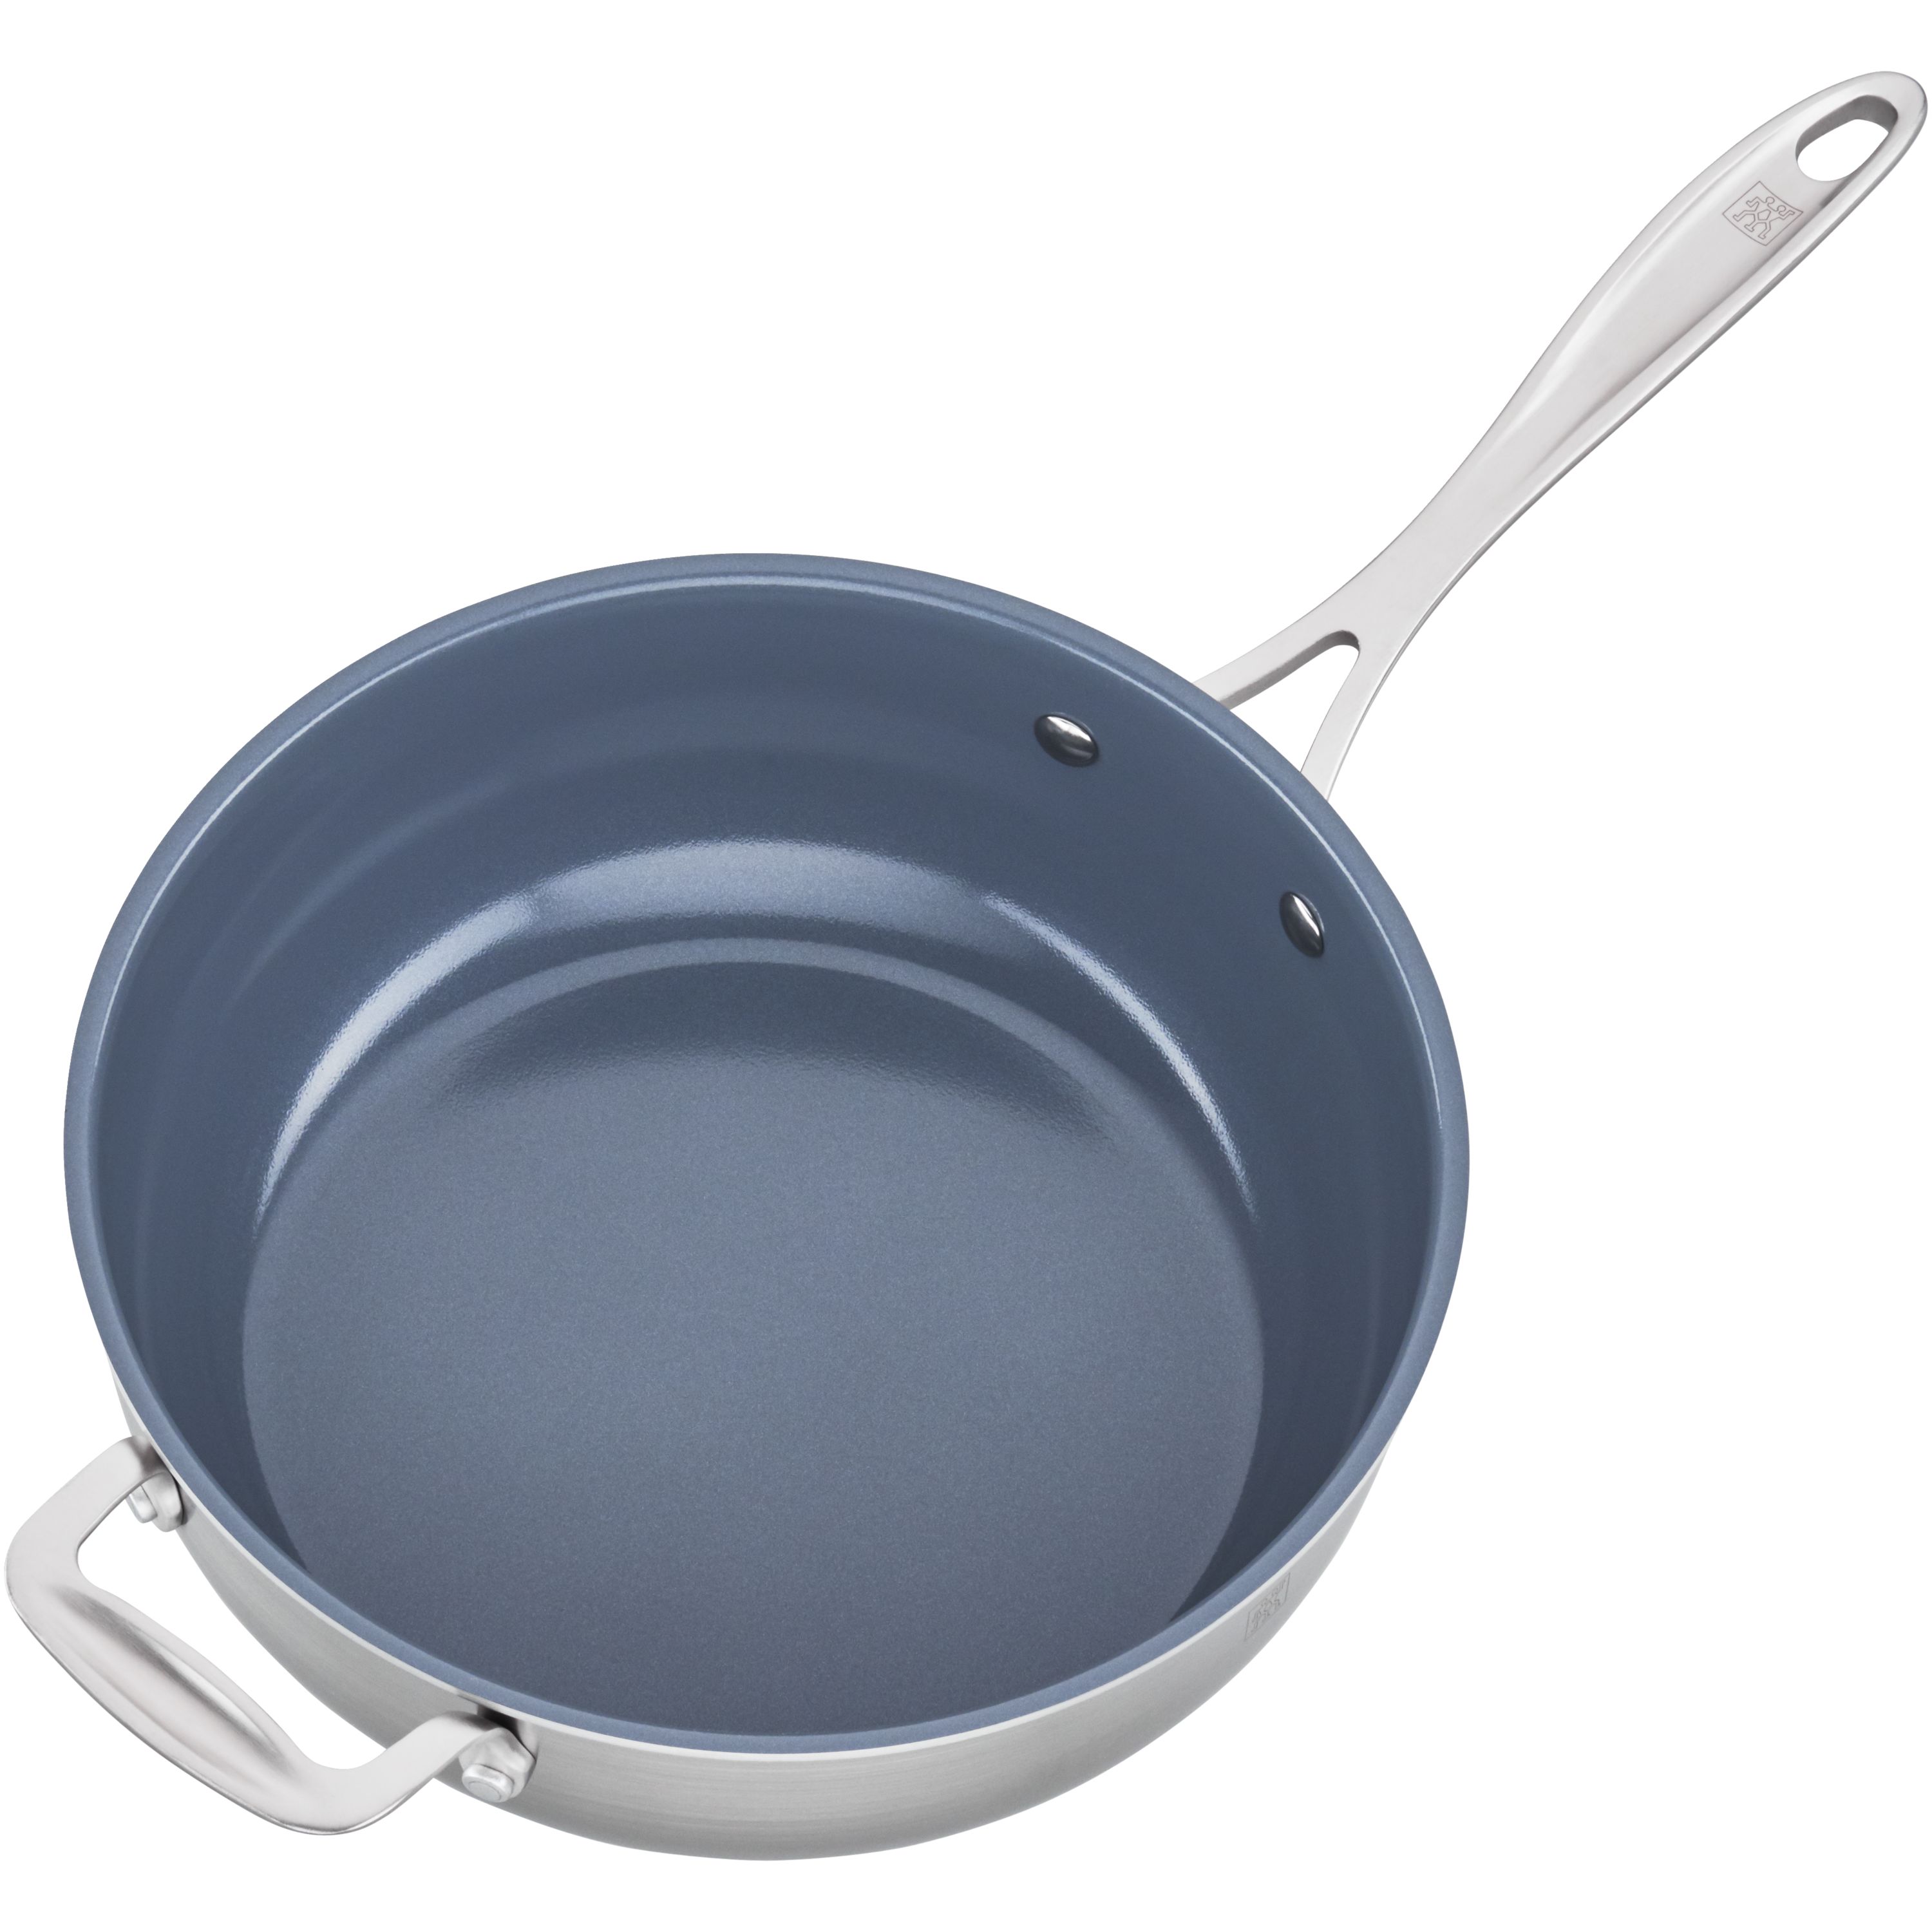 Zwilling Spirit Ceramic Nonstick Fry Pan, 10-inch, Stainless Steel